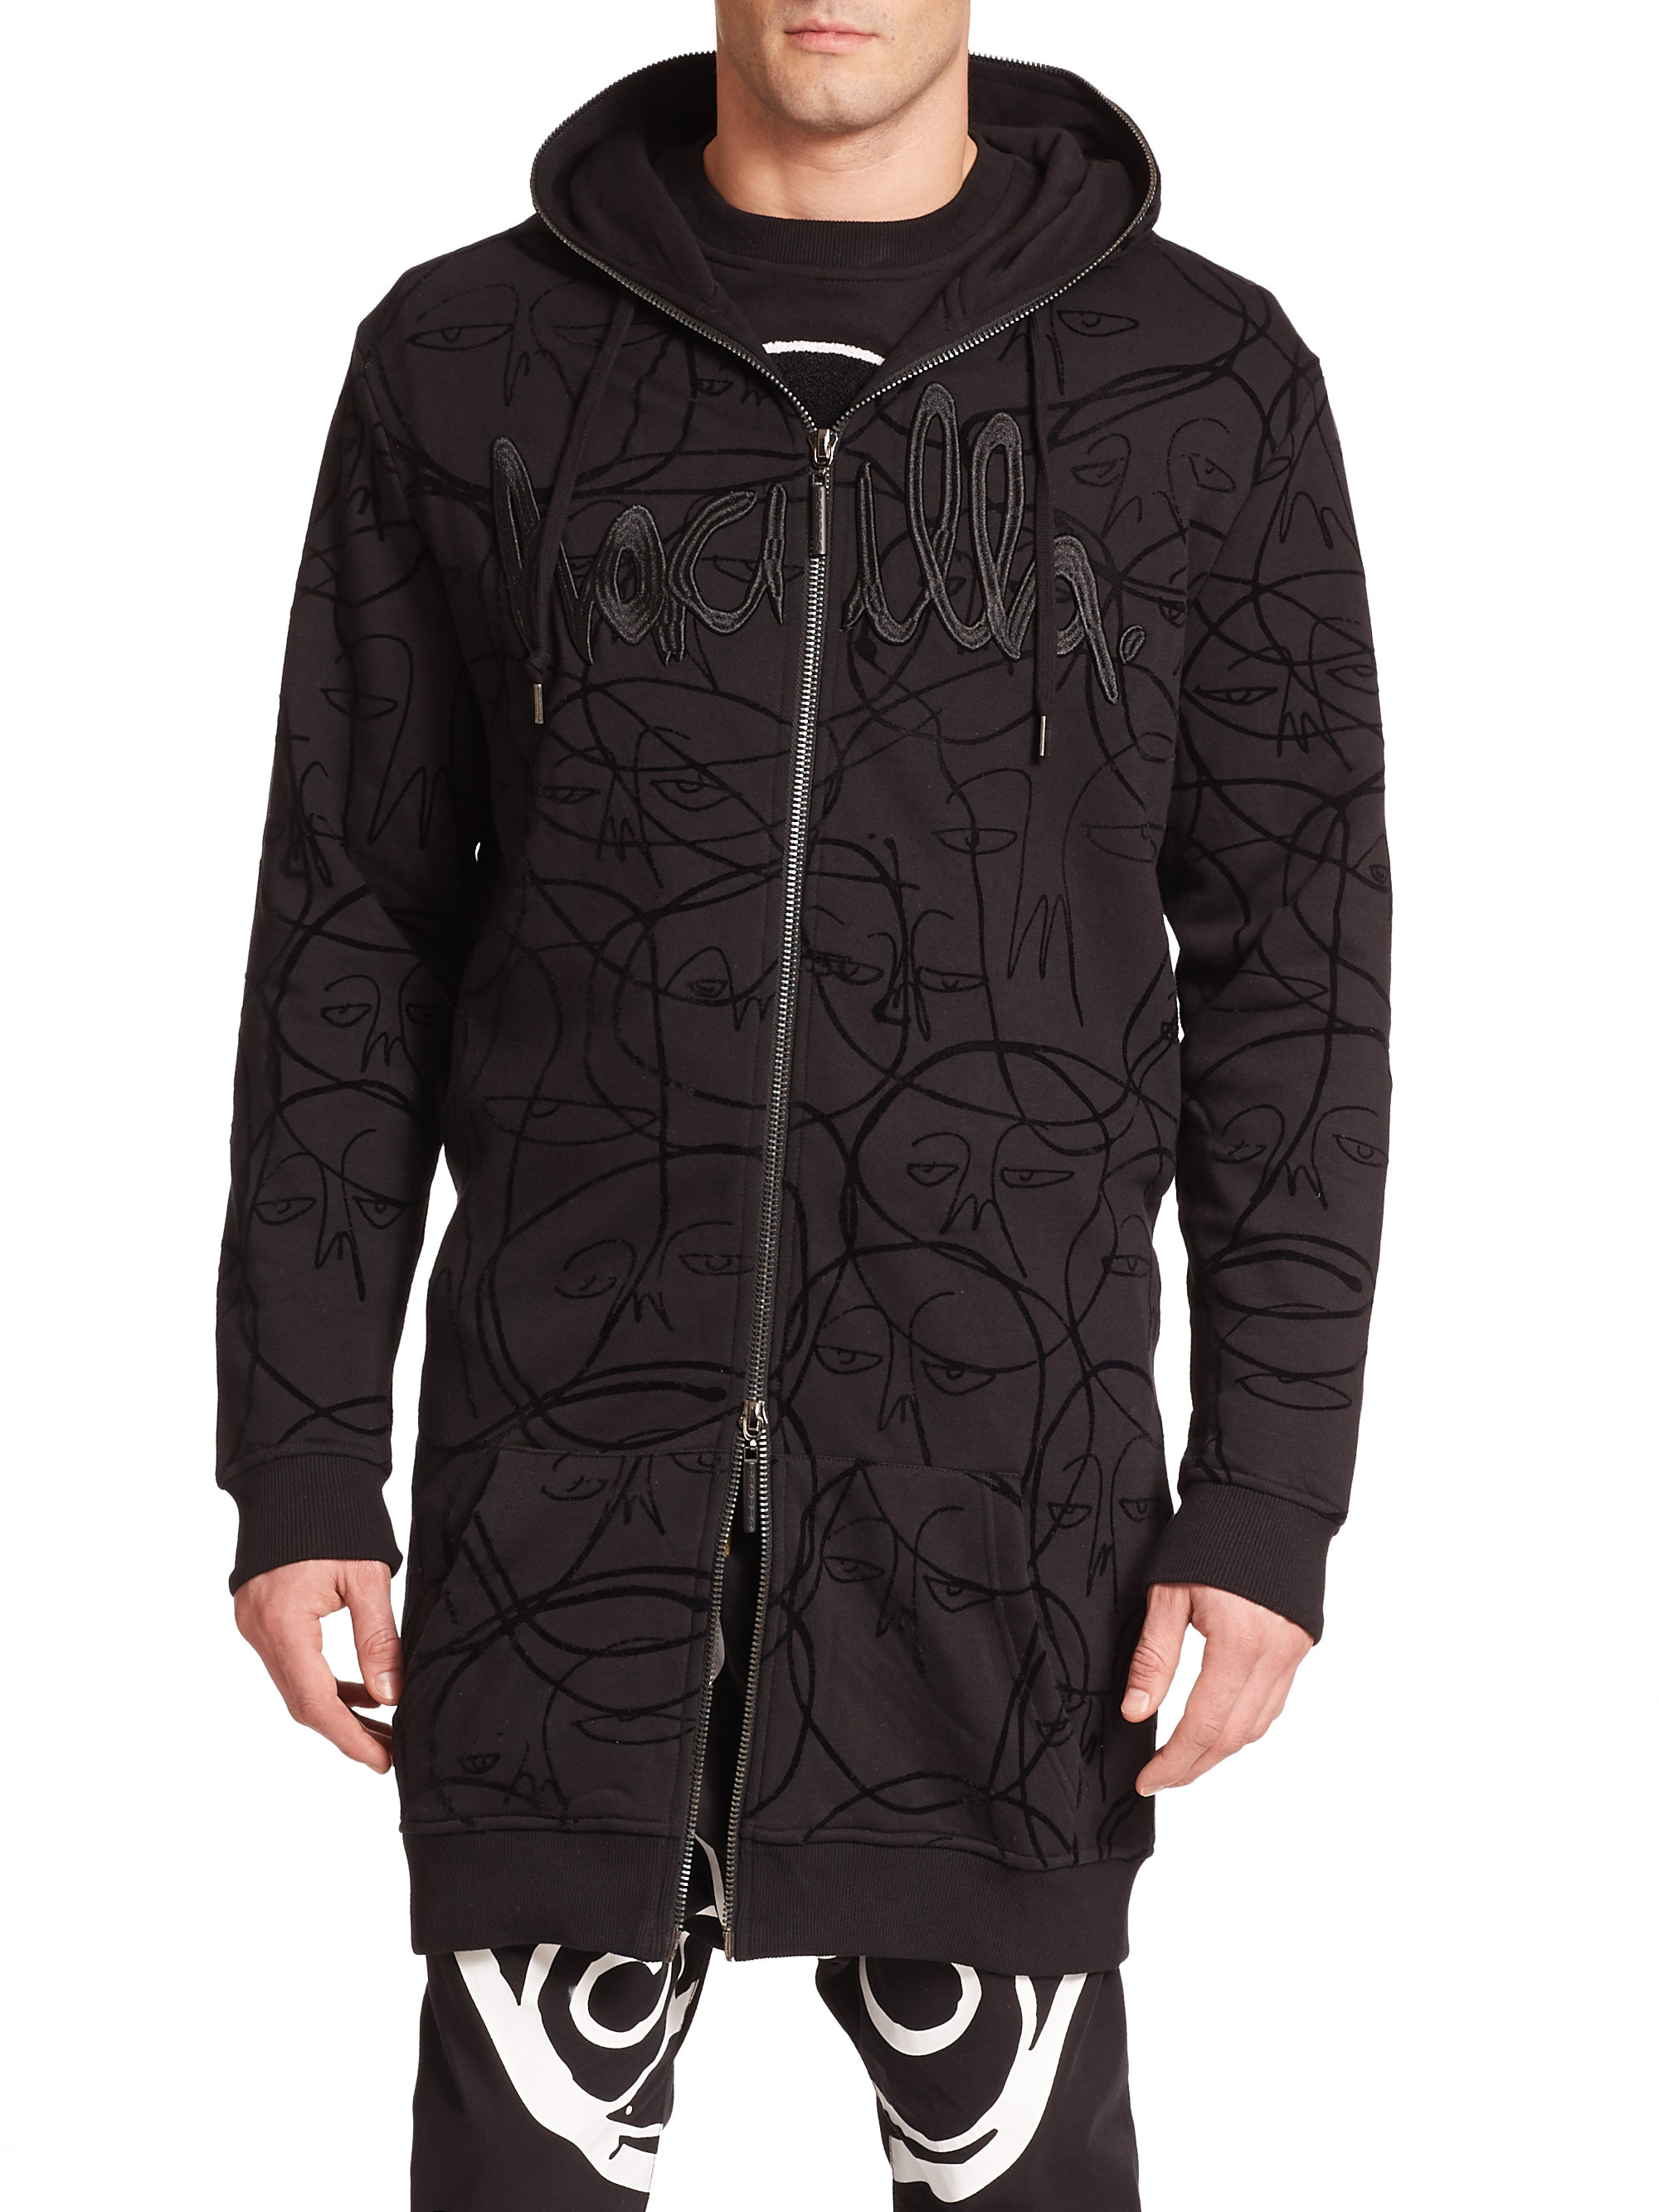 Lyst - Haculla Nyc Long Hooded Sweatshirt in Black for Men